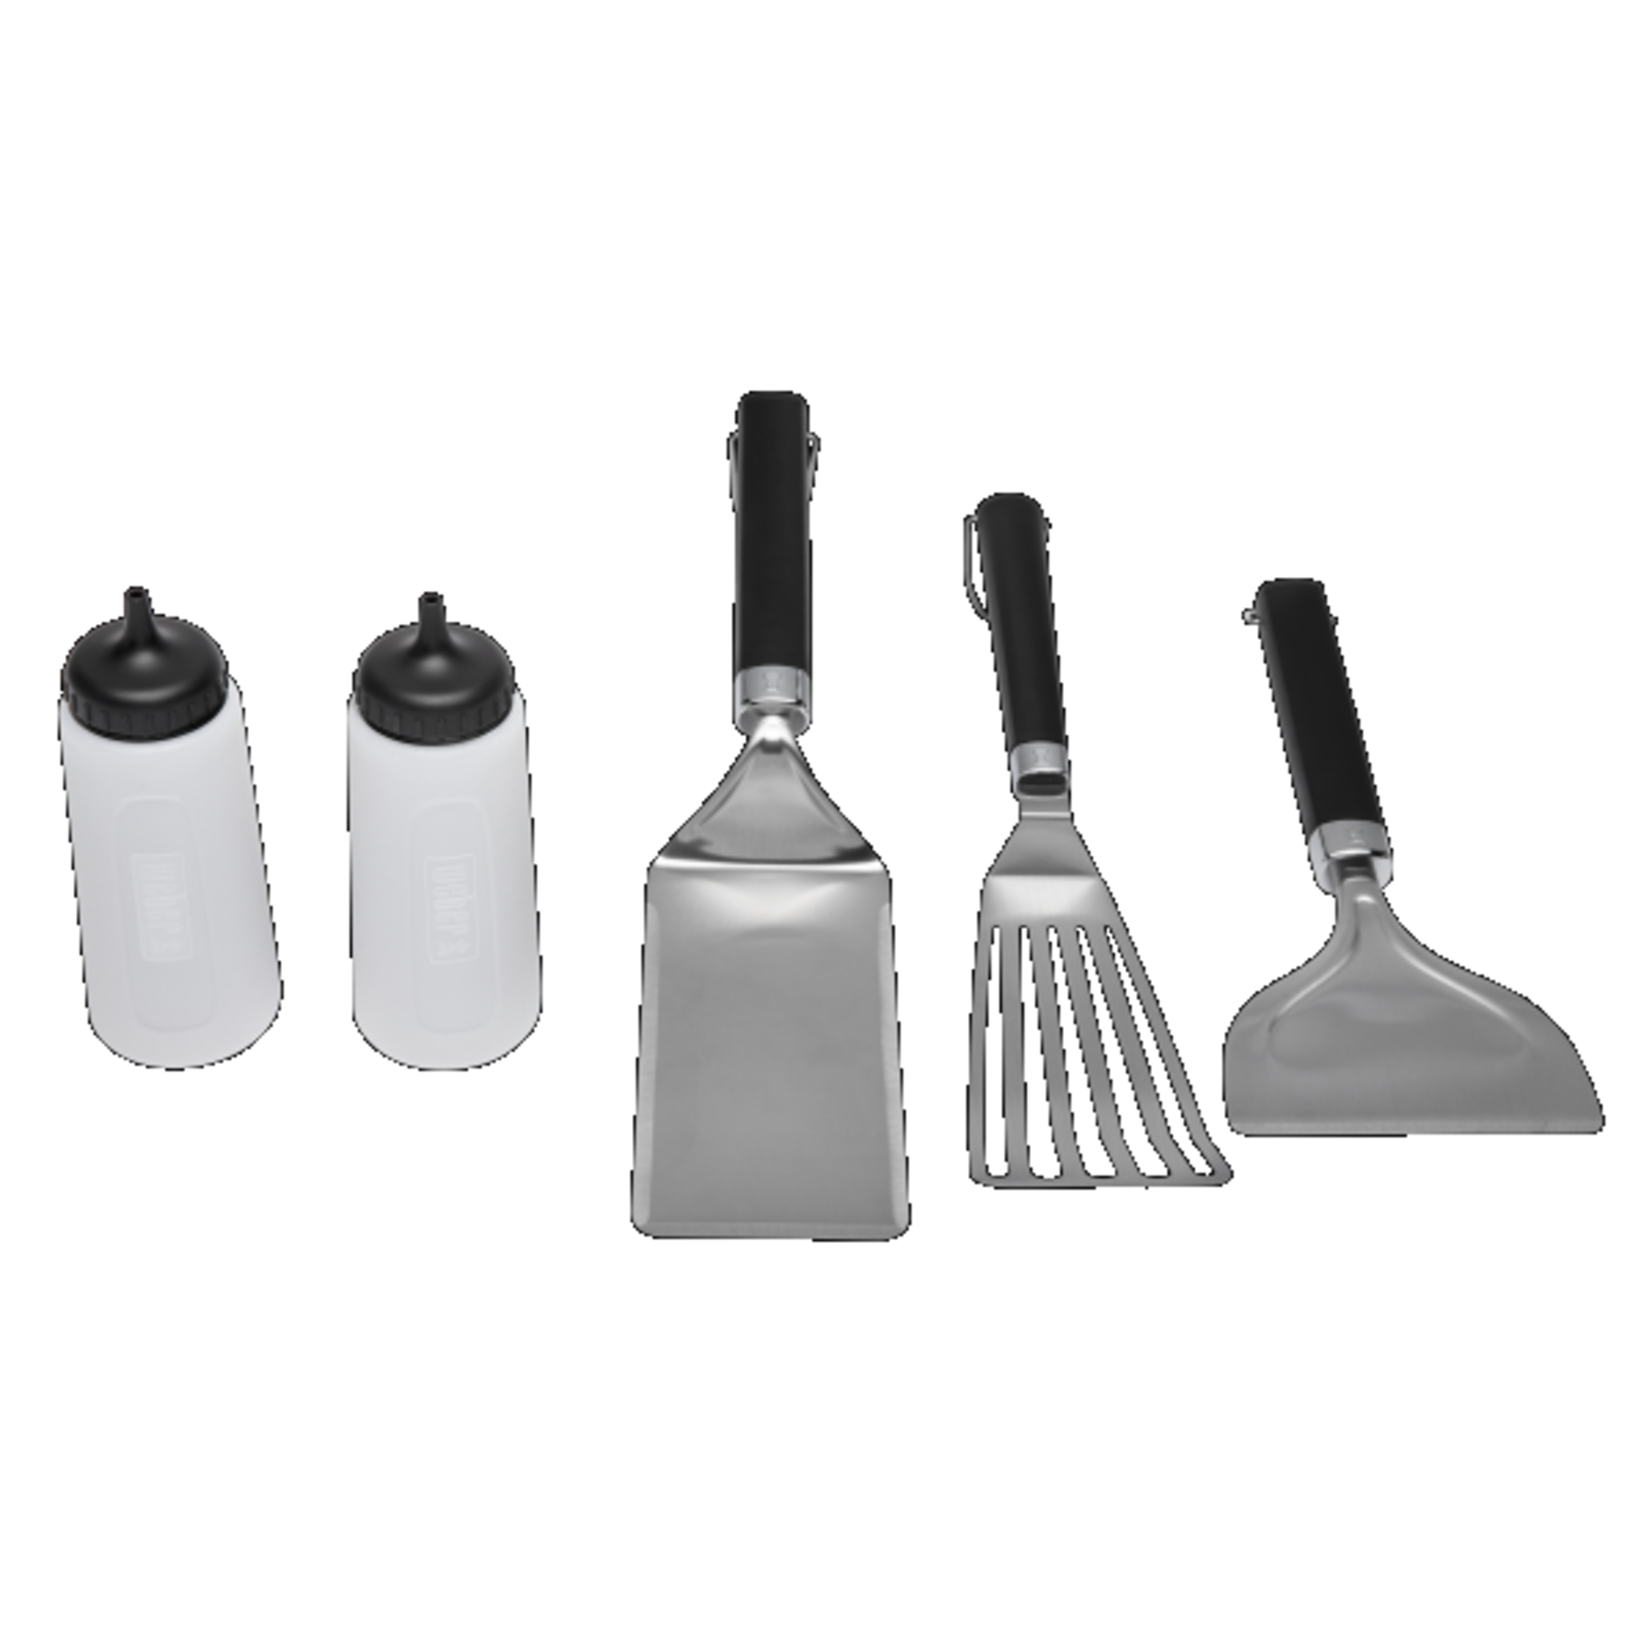 Weber Griddle Essential Set (Durable spatula, scraper, flex spatula, 2 squeeze Bottles)